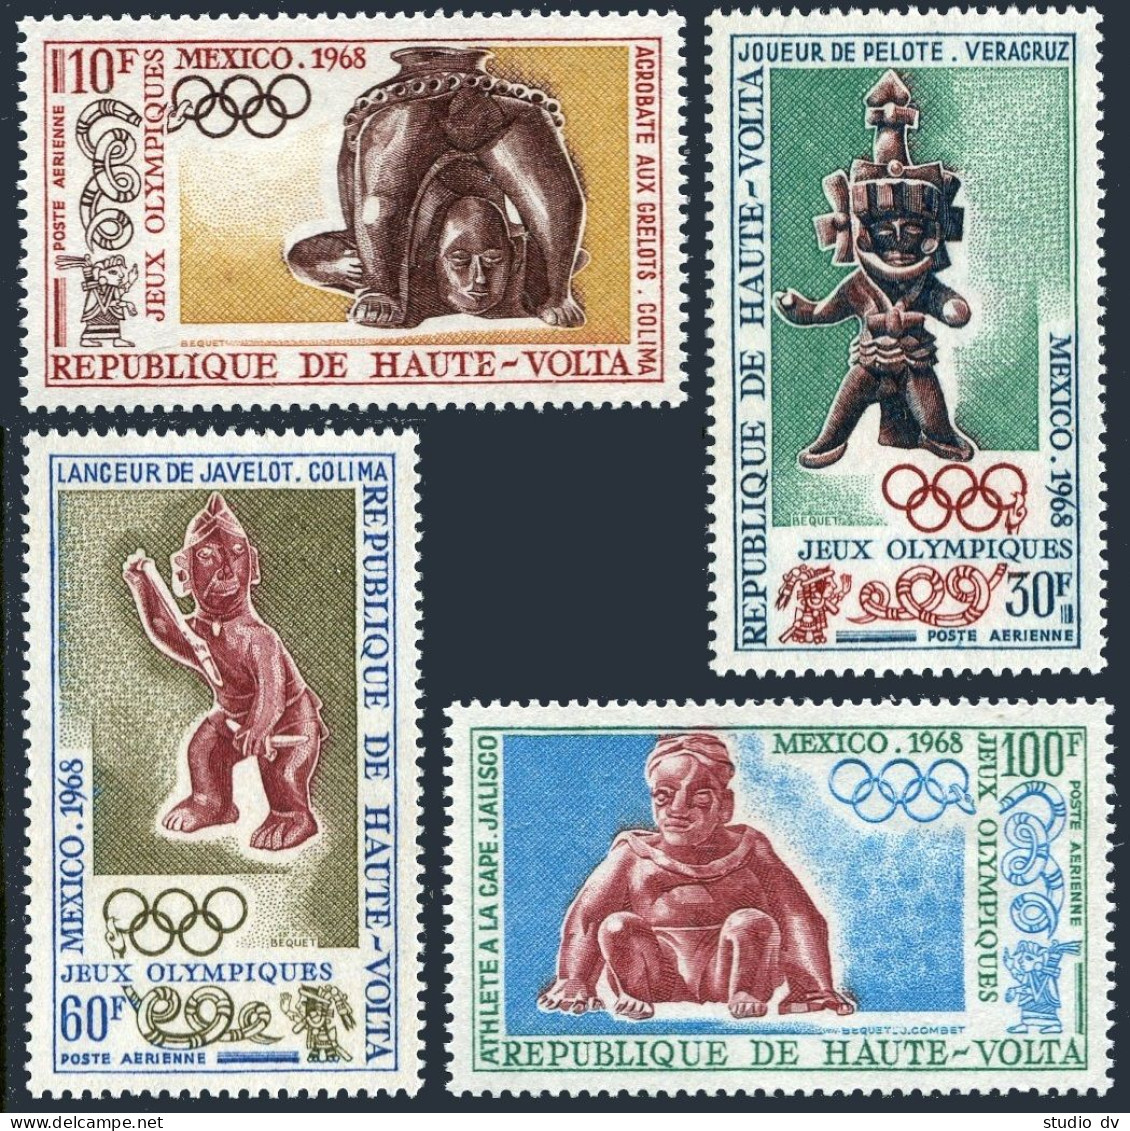 Burkina Faso C54-C57,MNH.Mi 246-249. Olympics Mexico-1968.Mexican Sculptures. - Burkina Faso (1984-...)